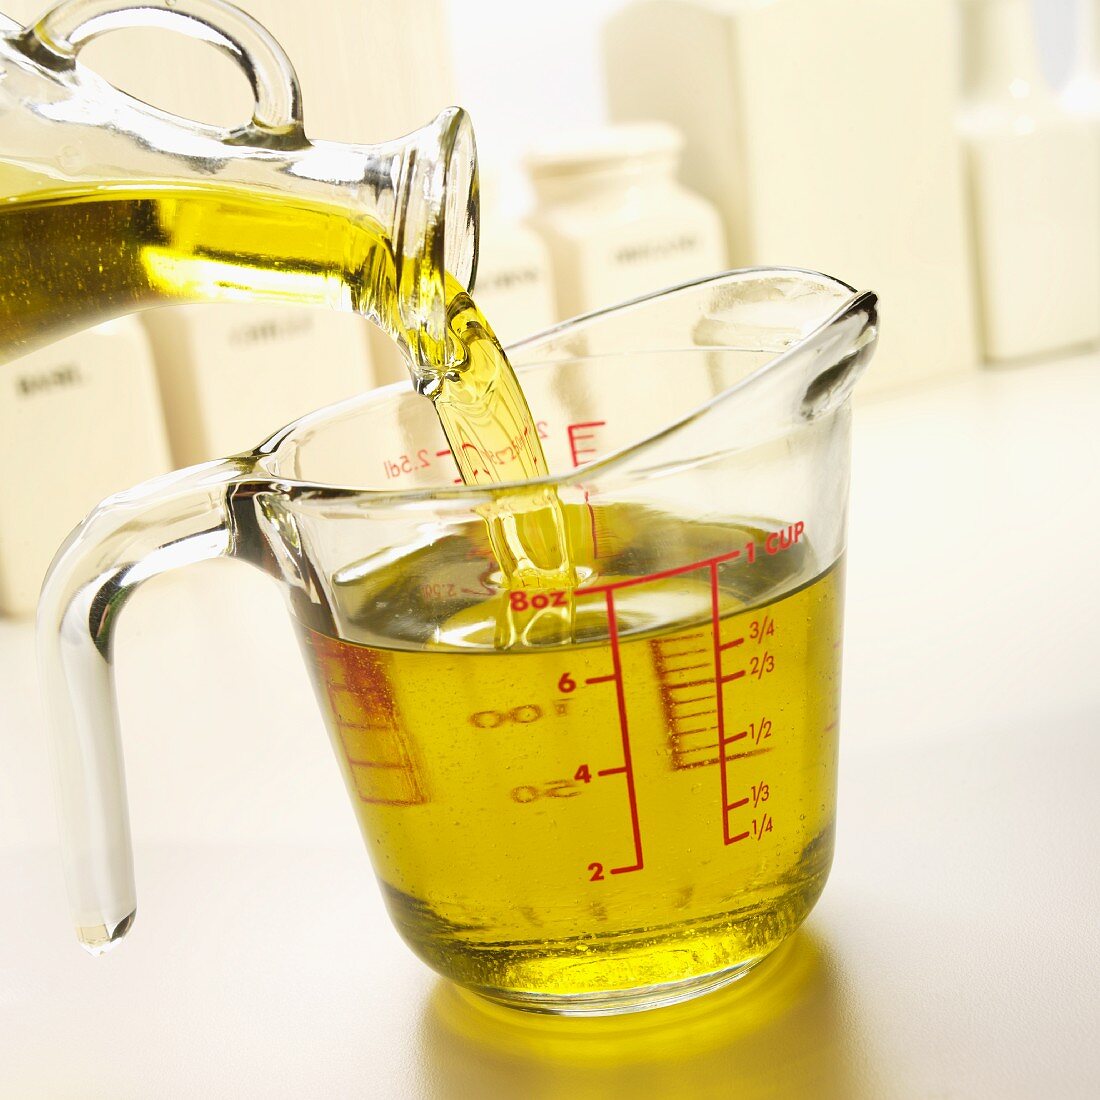 Oil measuring cups